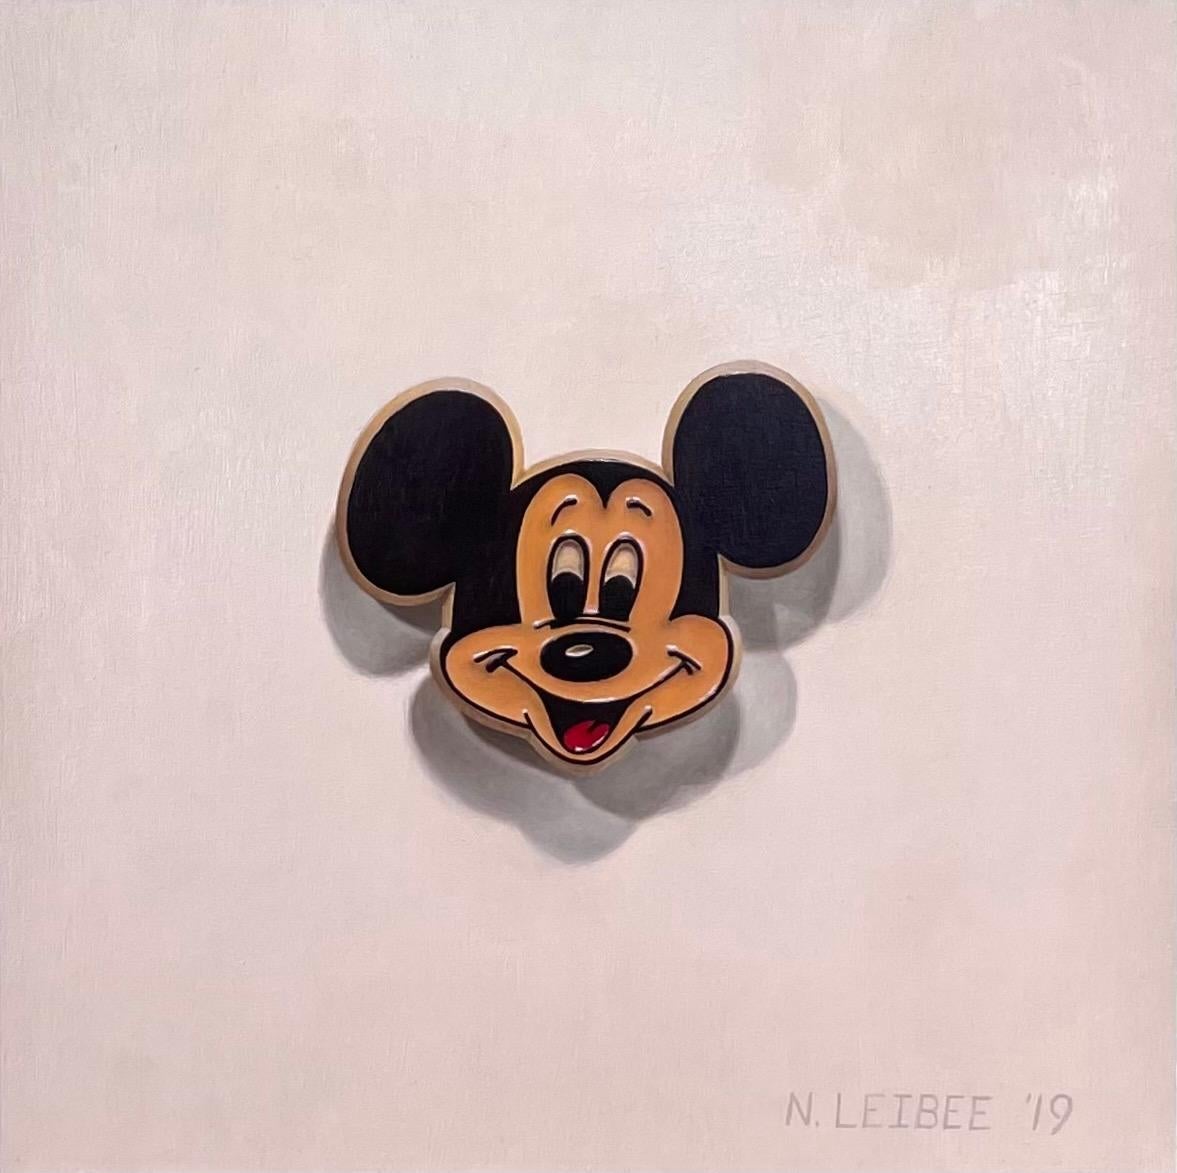 Still-Life Painting Nick Leibee - Peinture à l'huile "Mickey Pin"